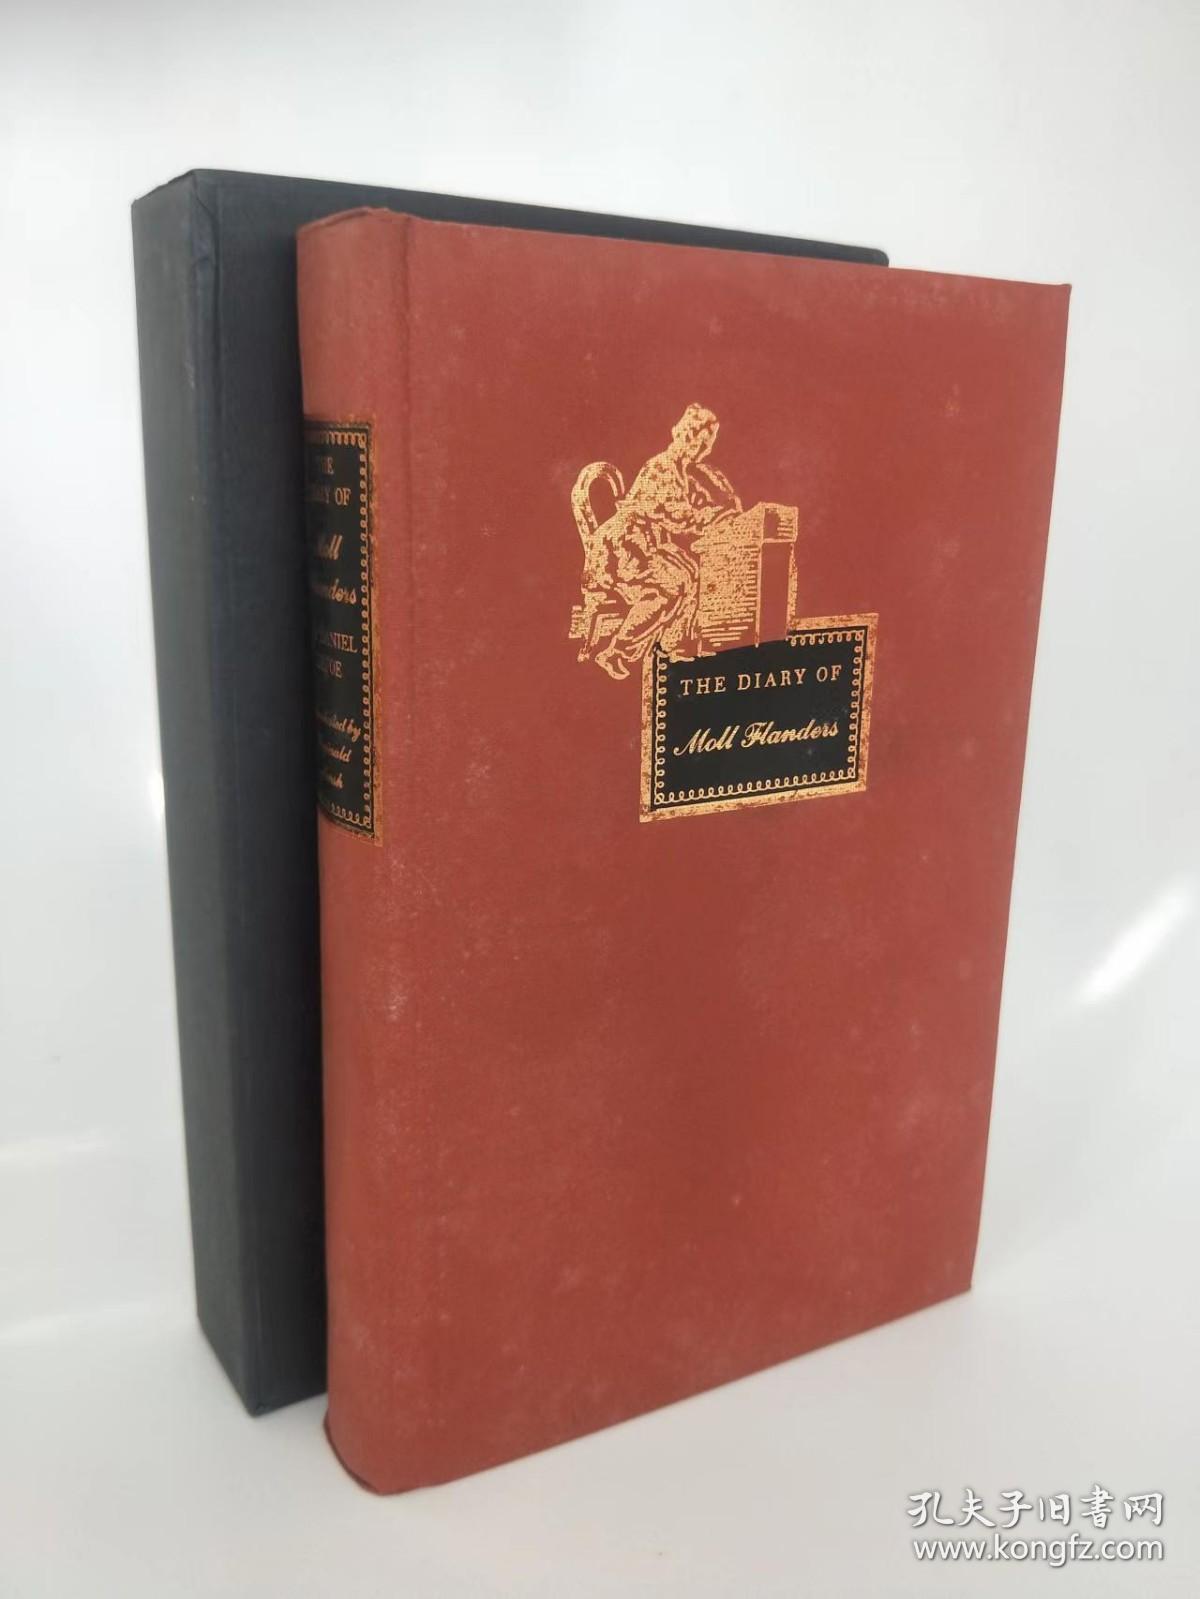 The Diary of Moll Flanders by Daniel Defoe - 笛福《摩尔 弗兰德斯》 1970年 Heritage  Press  硬精装